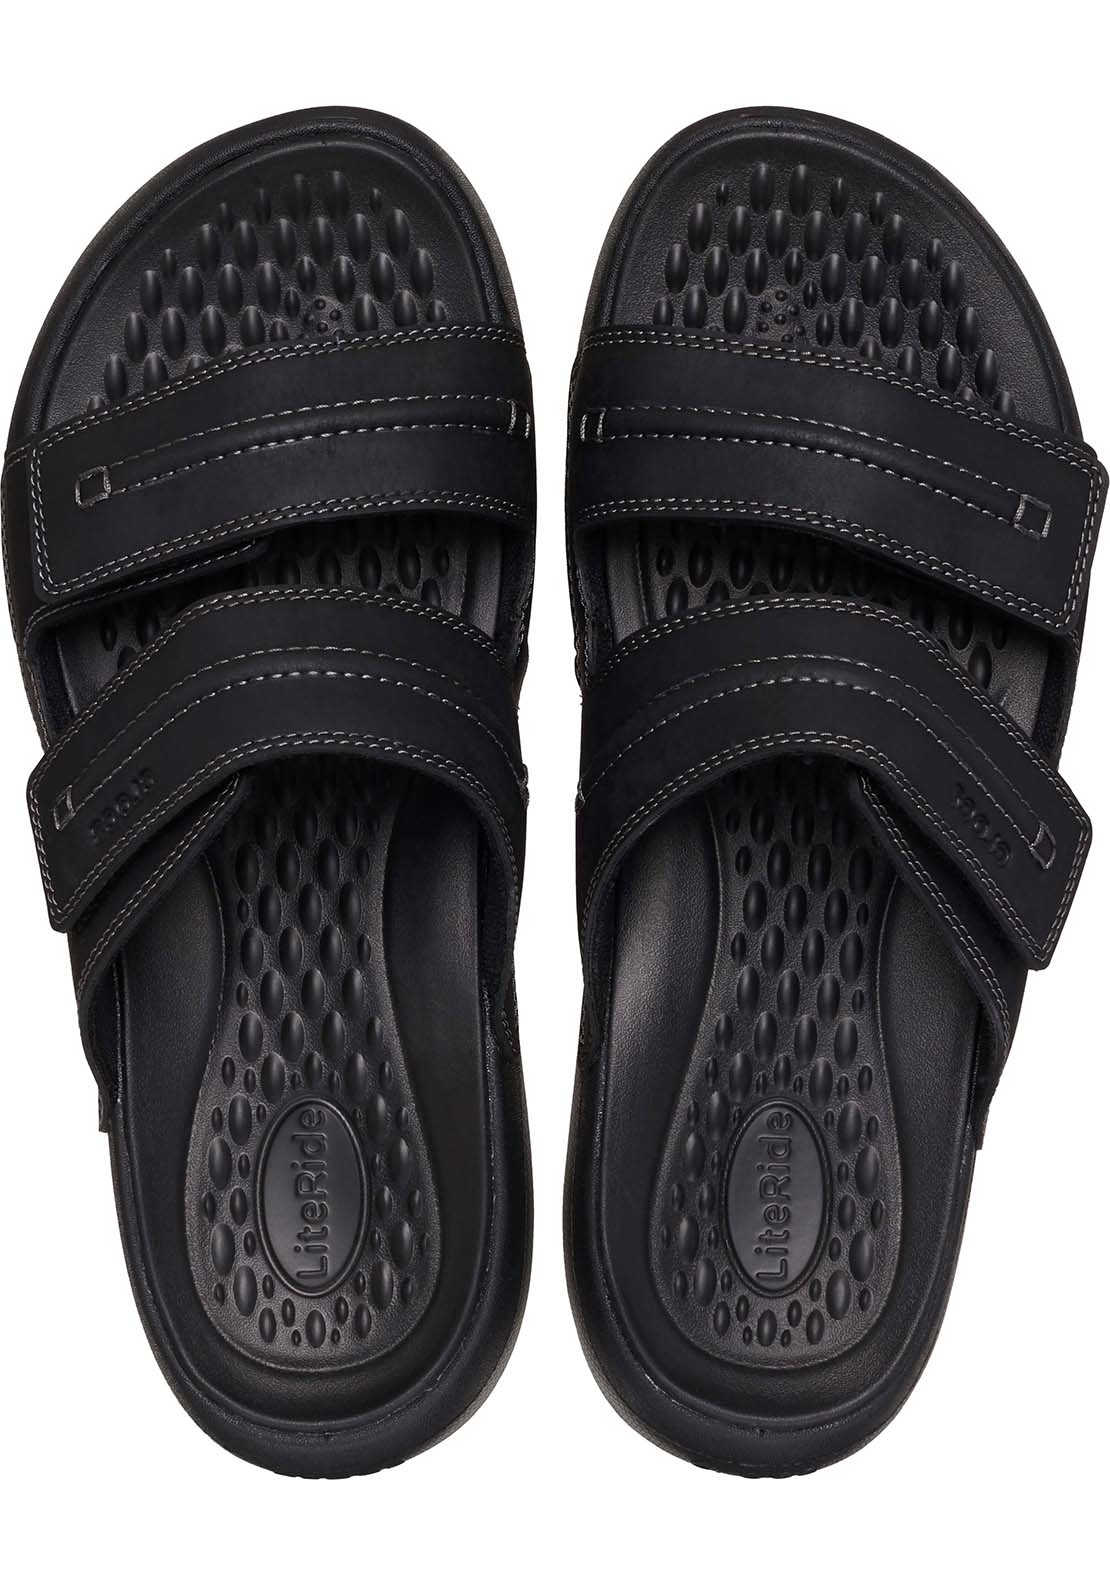 Crocs Yukon Vista II Sandal - Black 2 Shaws Department Stores